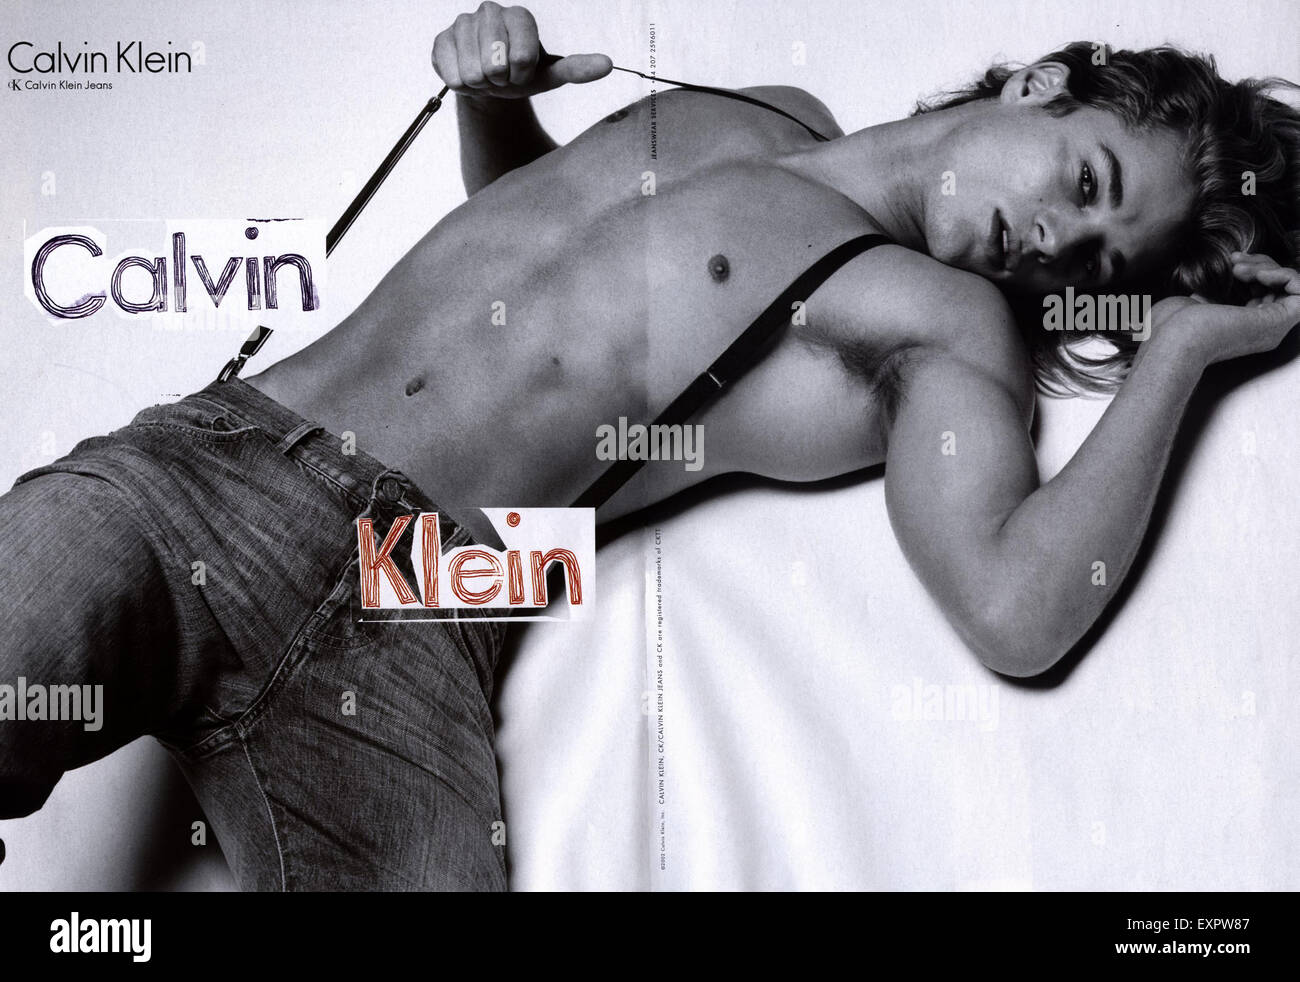 2000s UK Calvin Klein Magazine Advert Stock Photo - Alamy